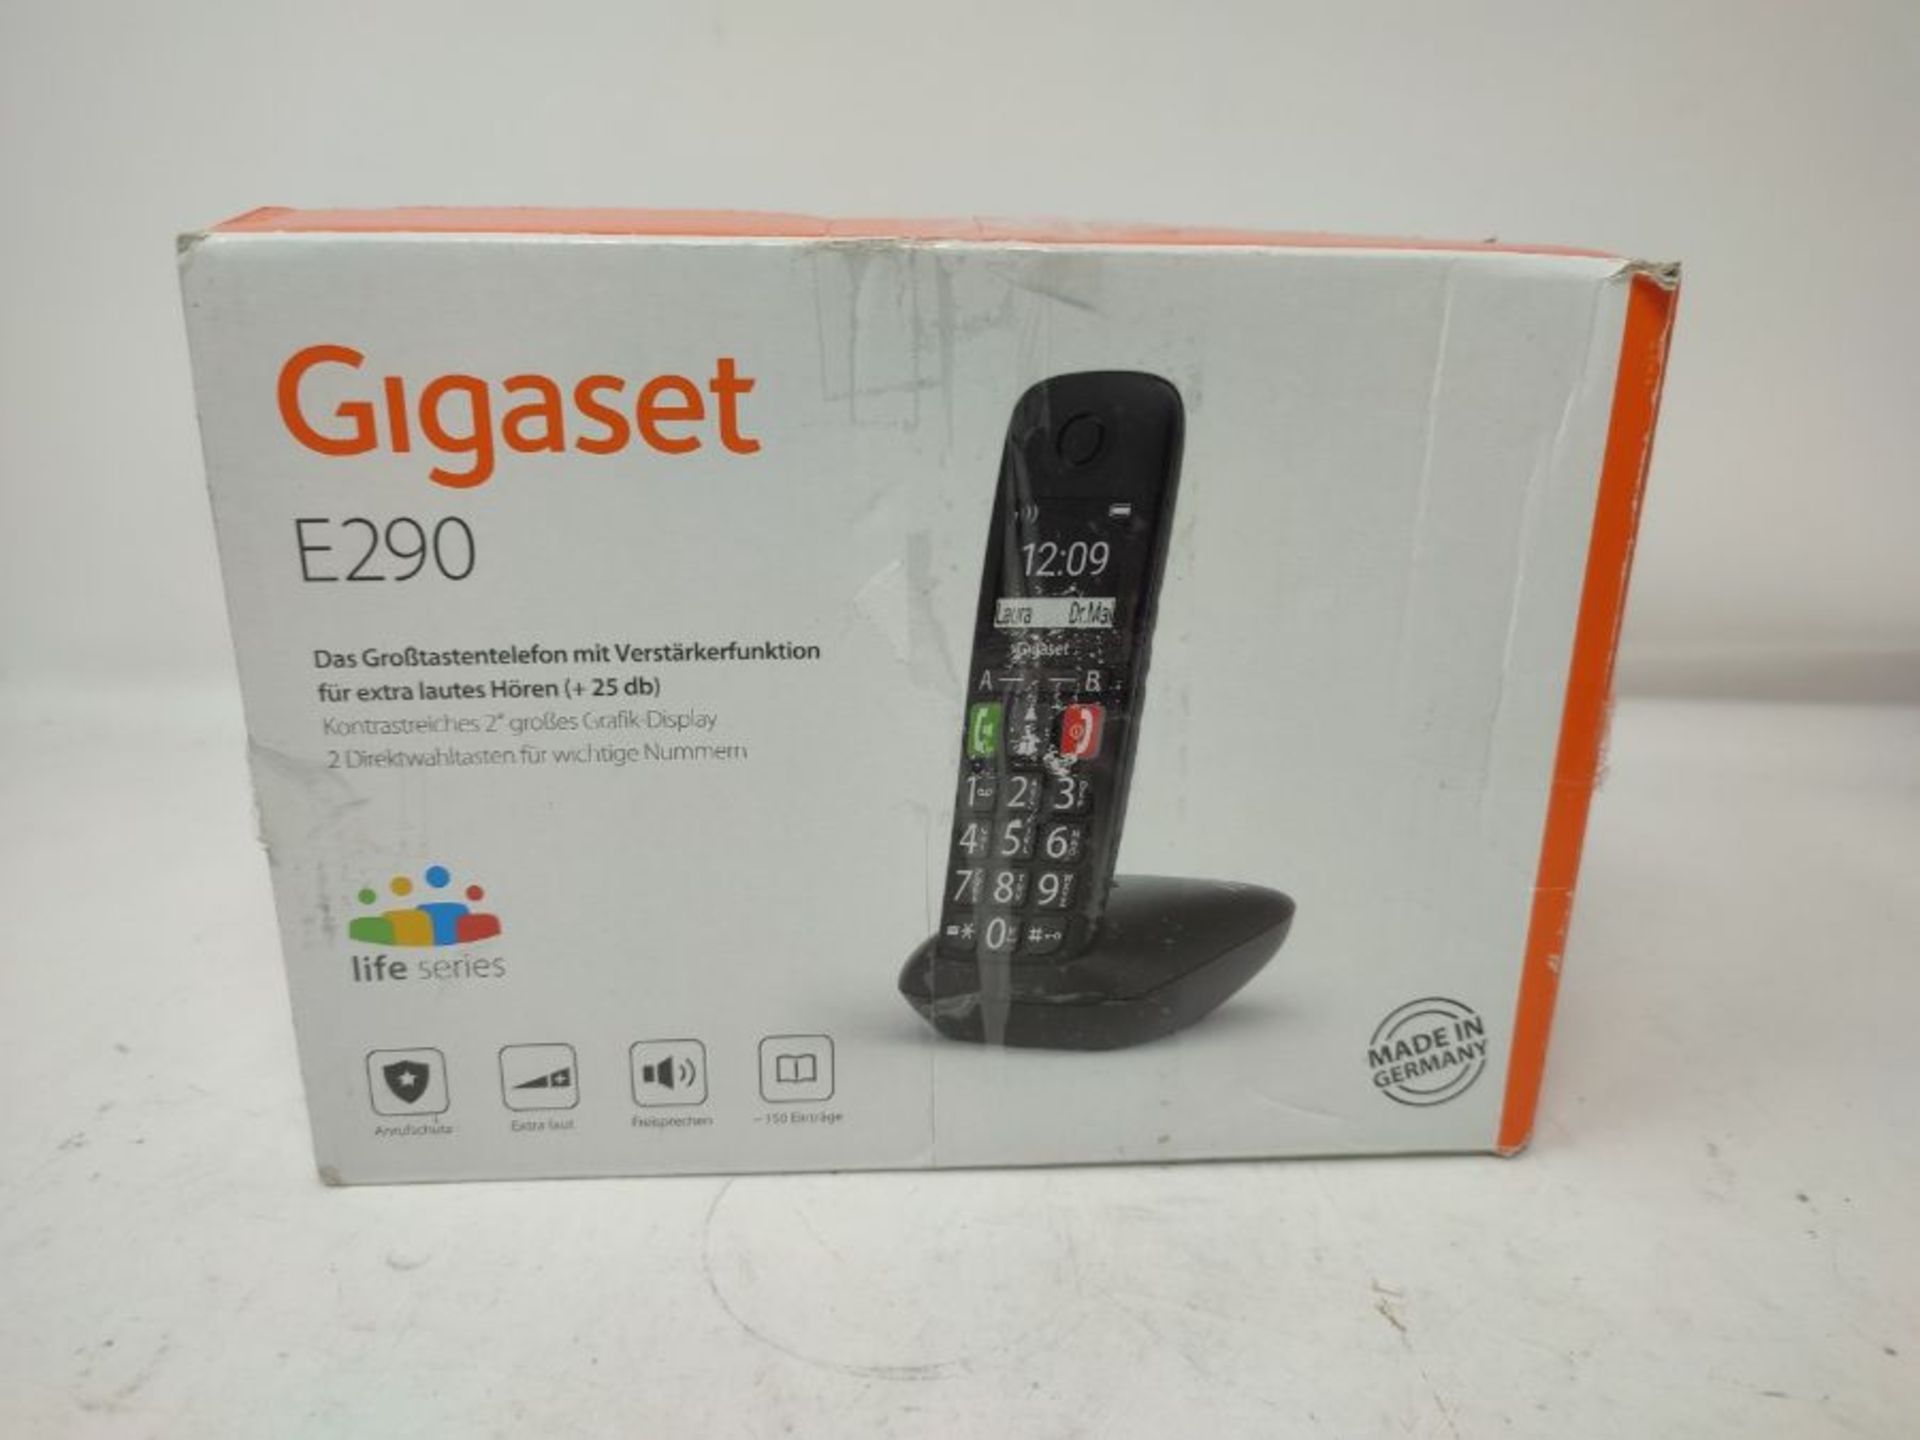 Gigaset E290 - Image 2 of 3